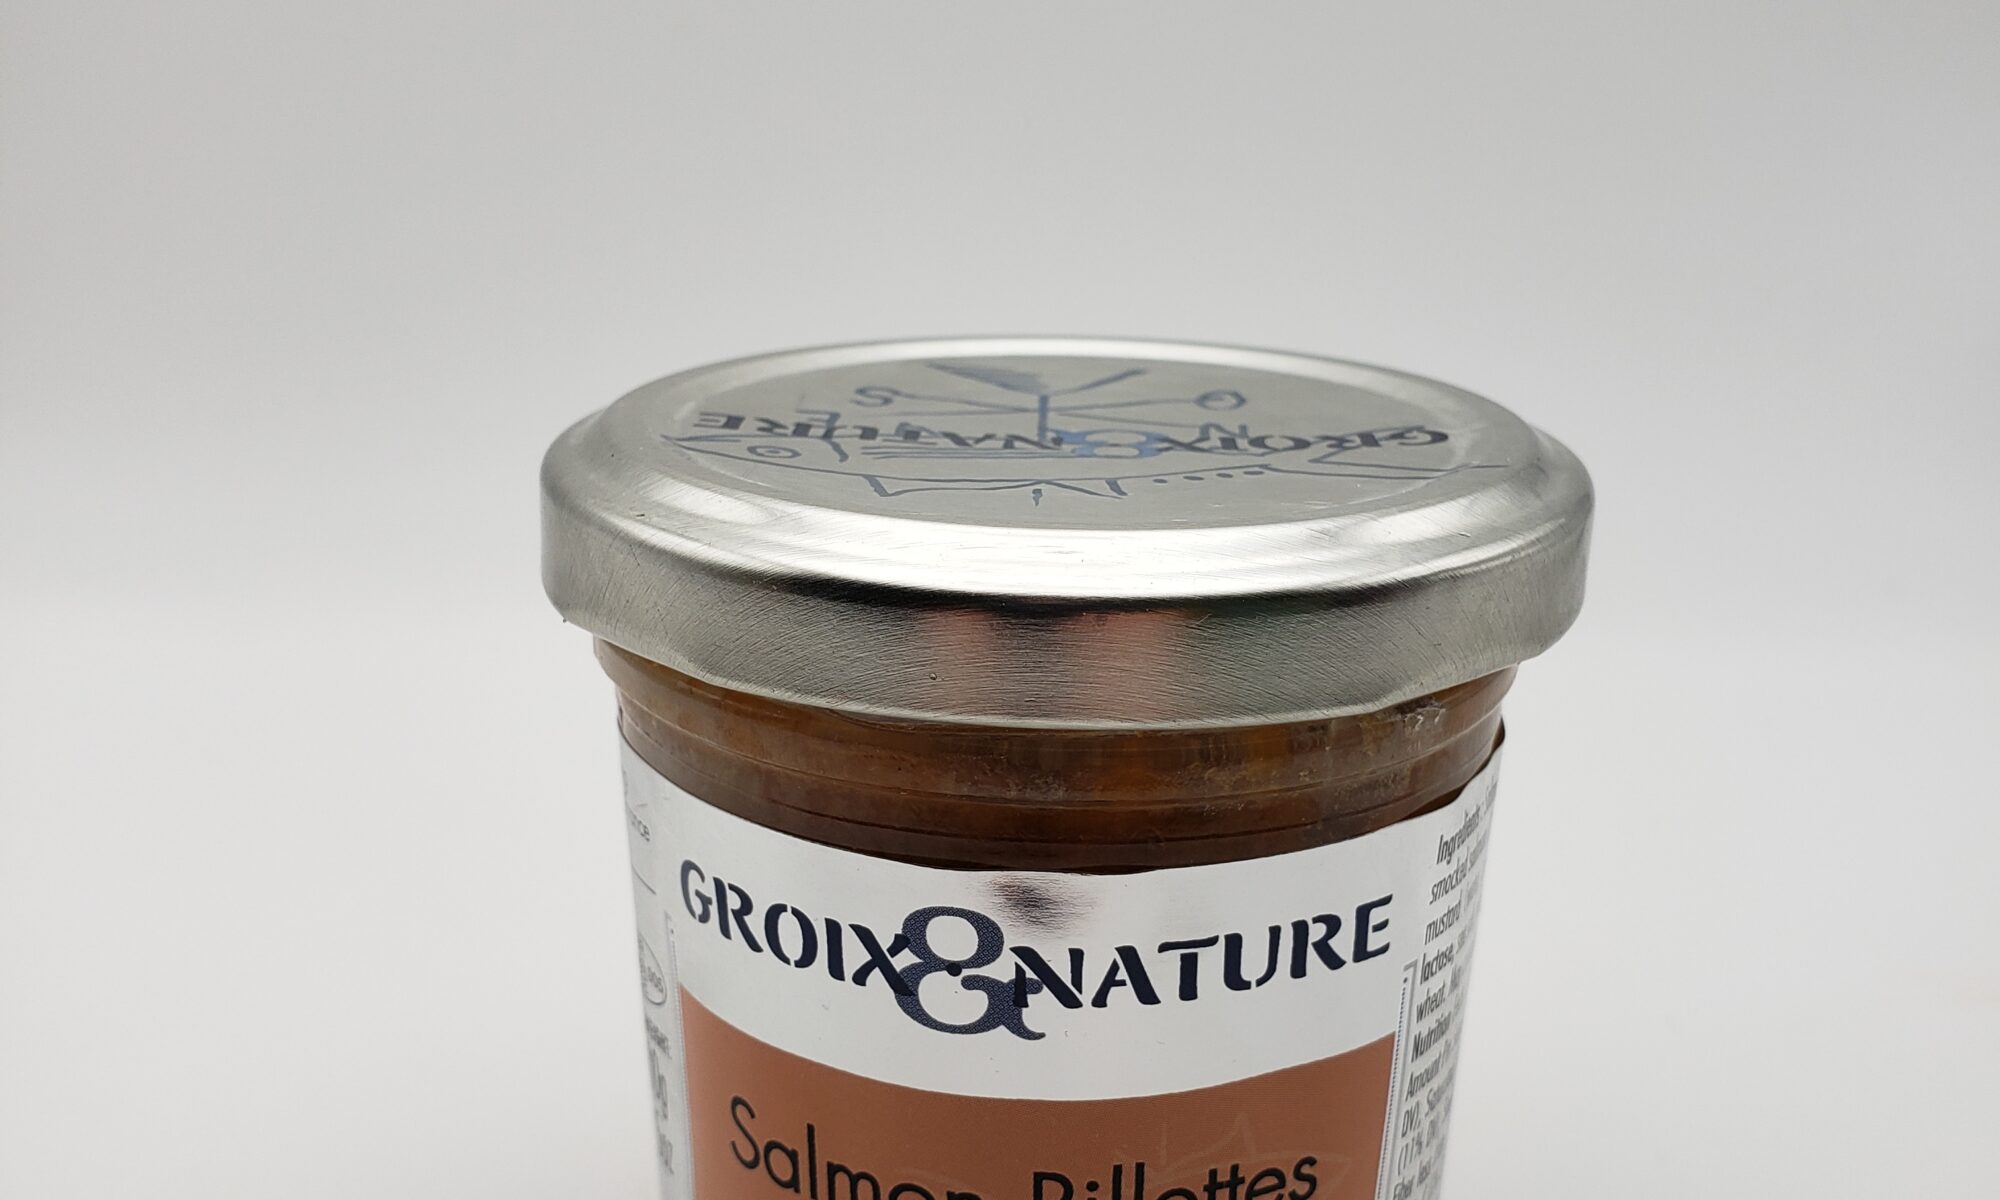 Image of Groix & Nature salmon rillettes